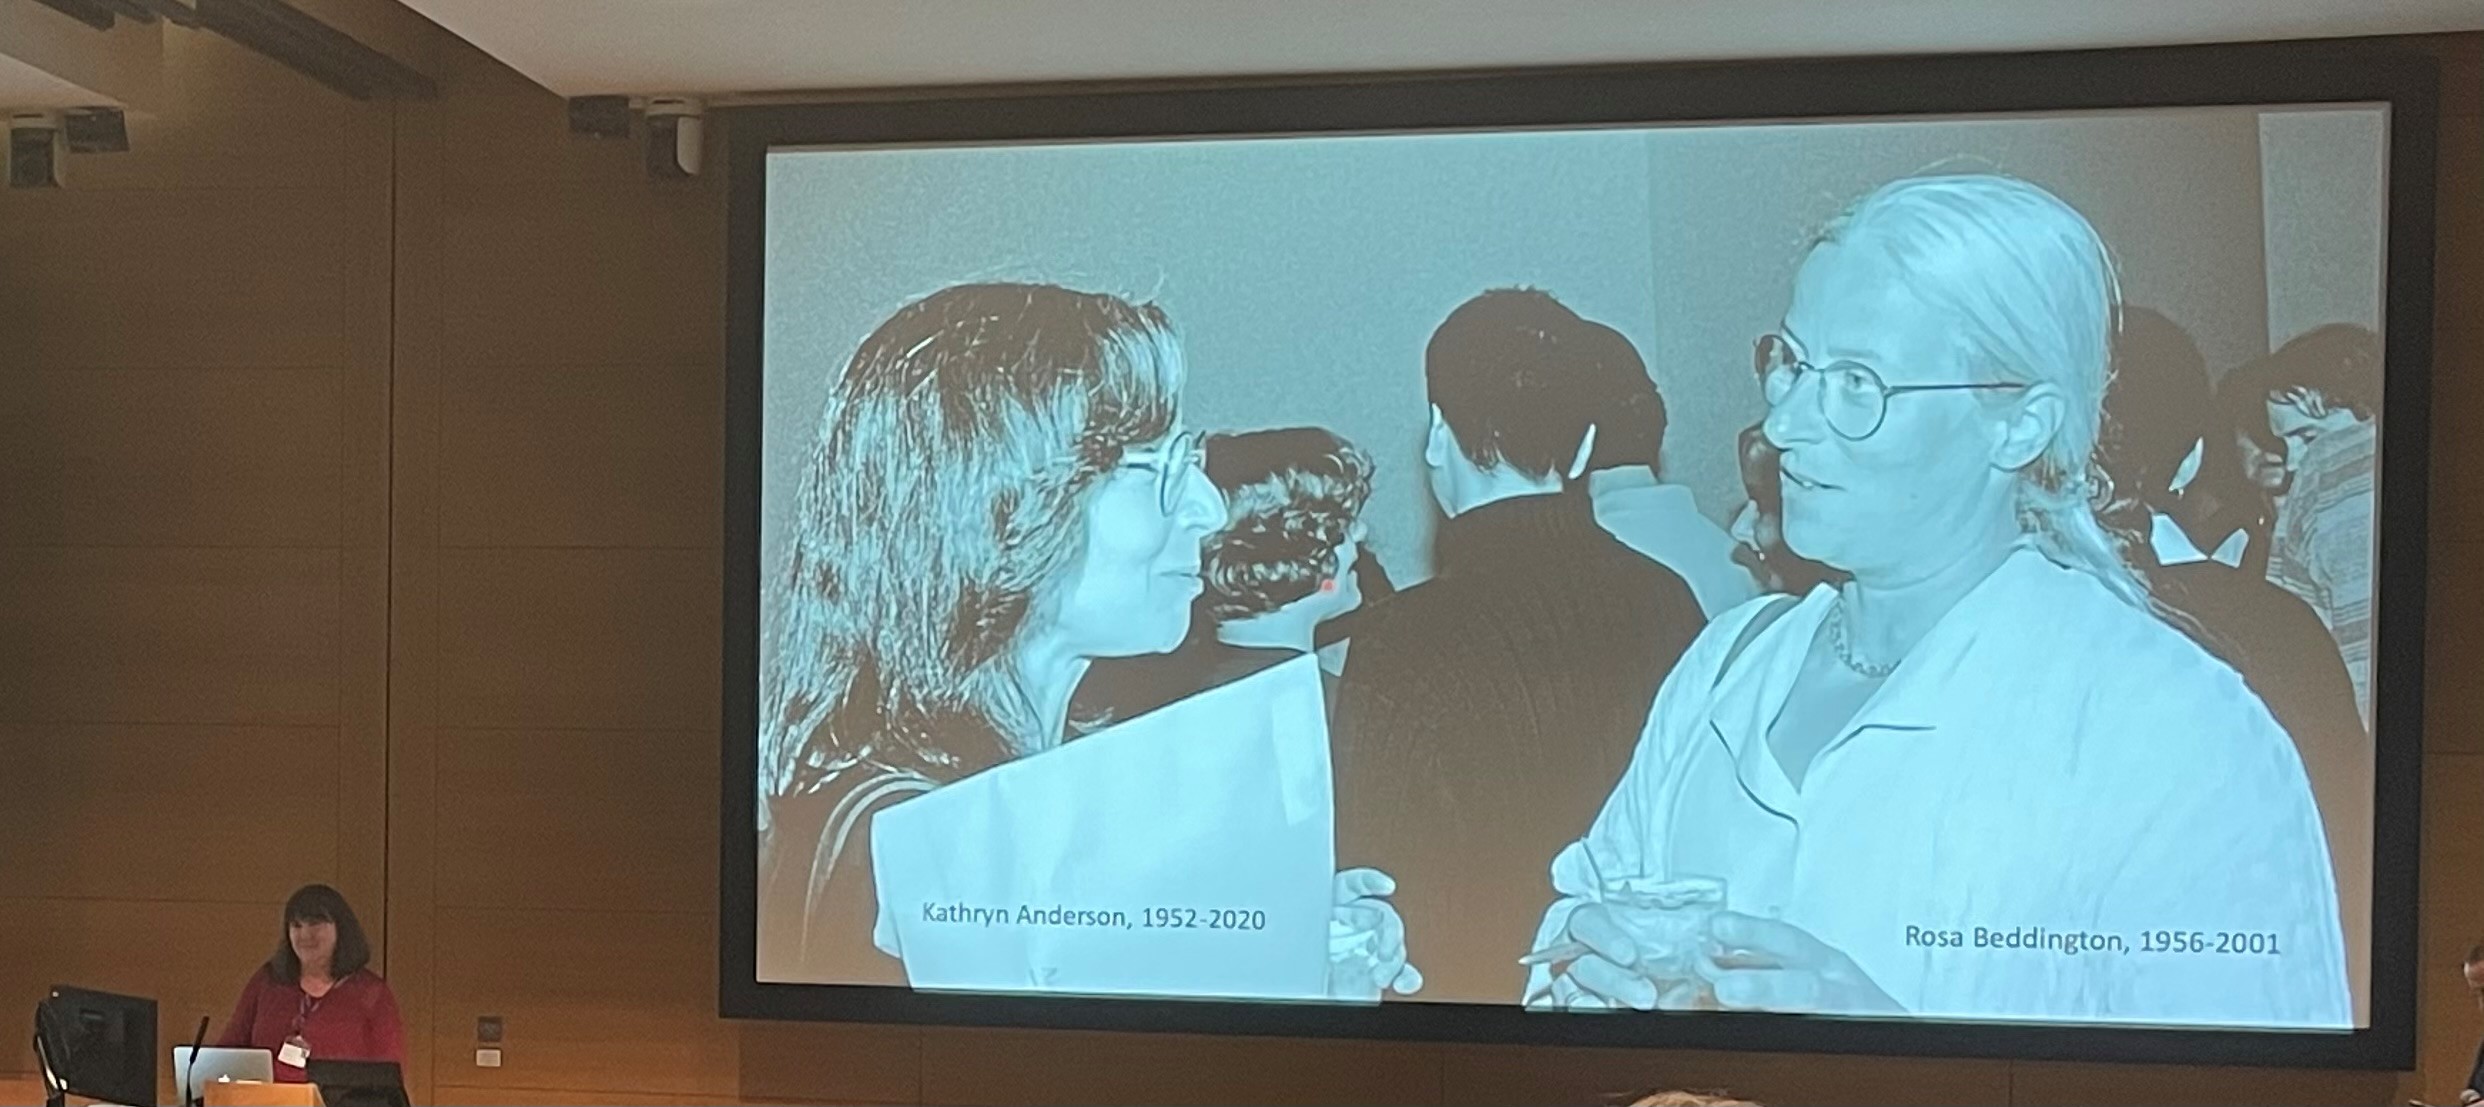 Tamara Caspary presenting a photo of Rosa Beddington and Kathryn Anderson (1952-2020).